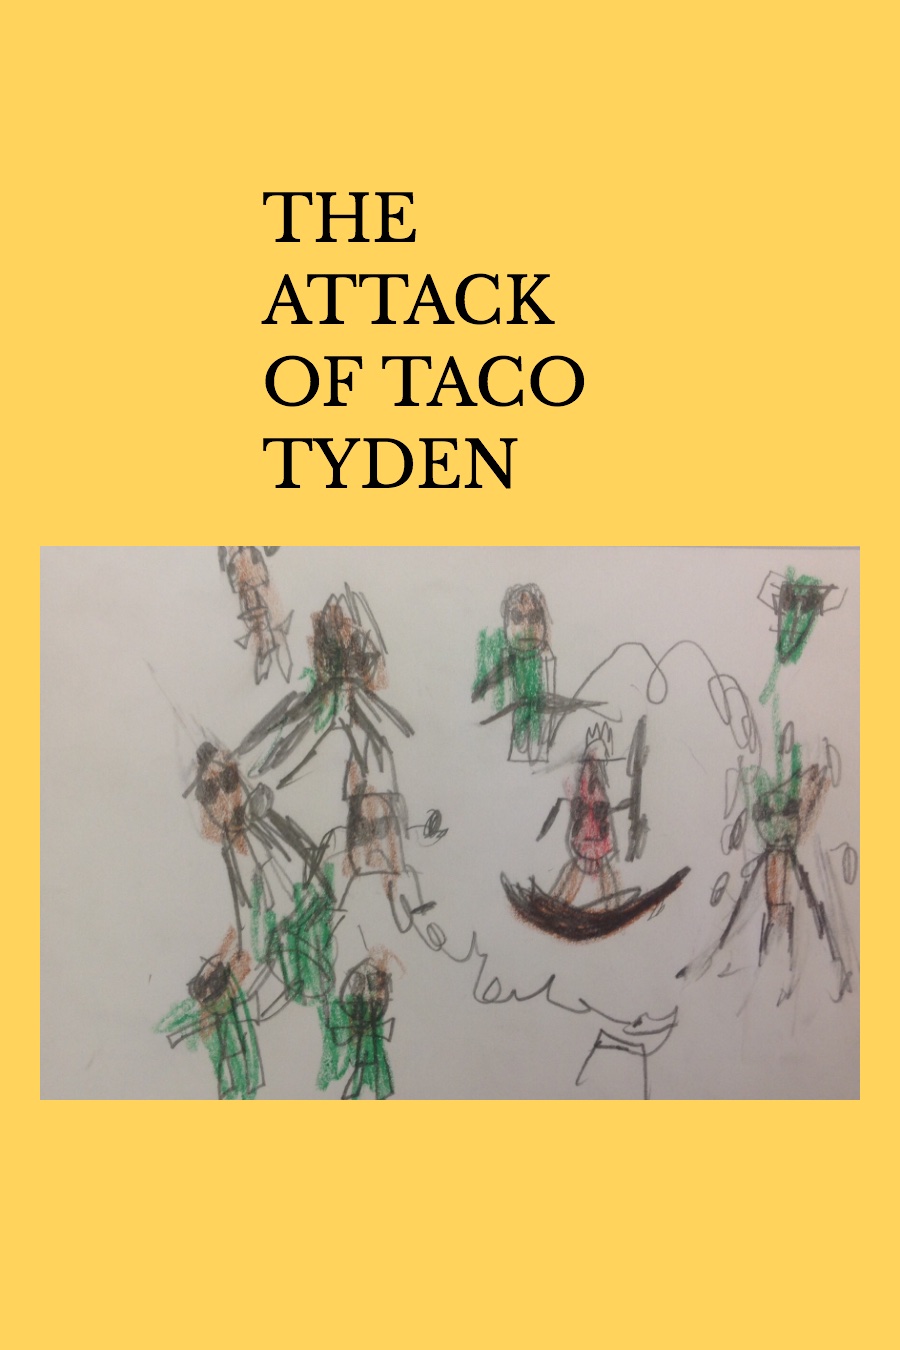 The atatck of Taco Tyden by Shane F (1)